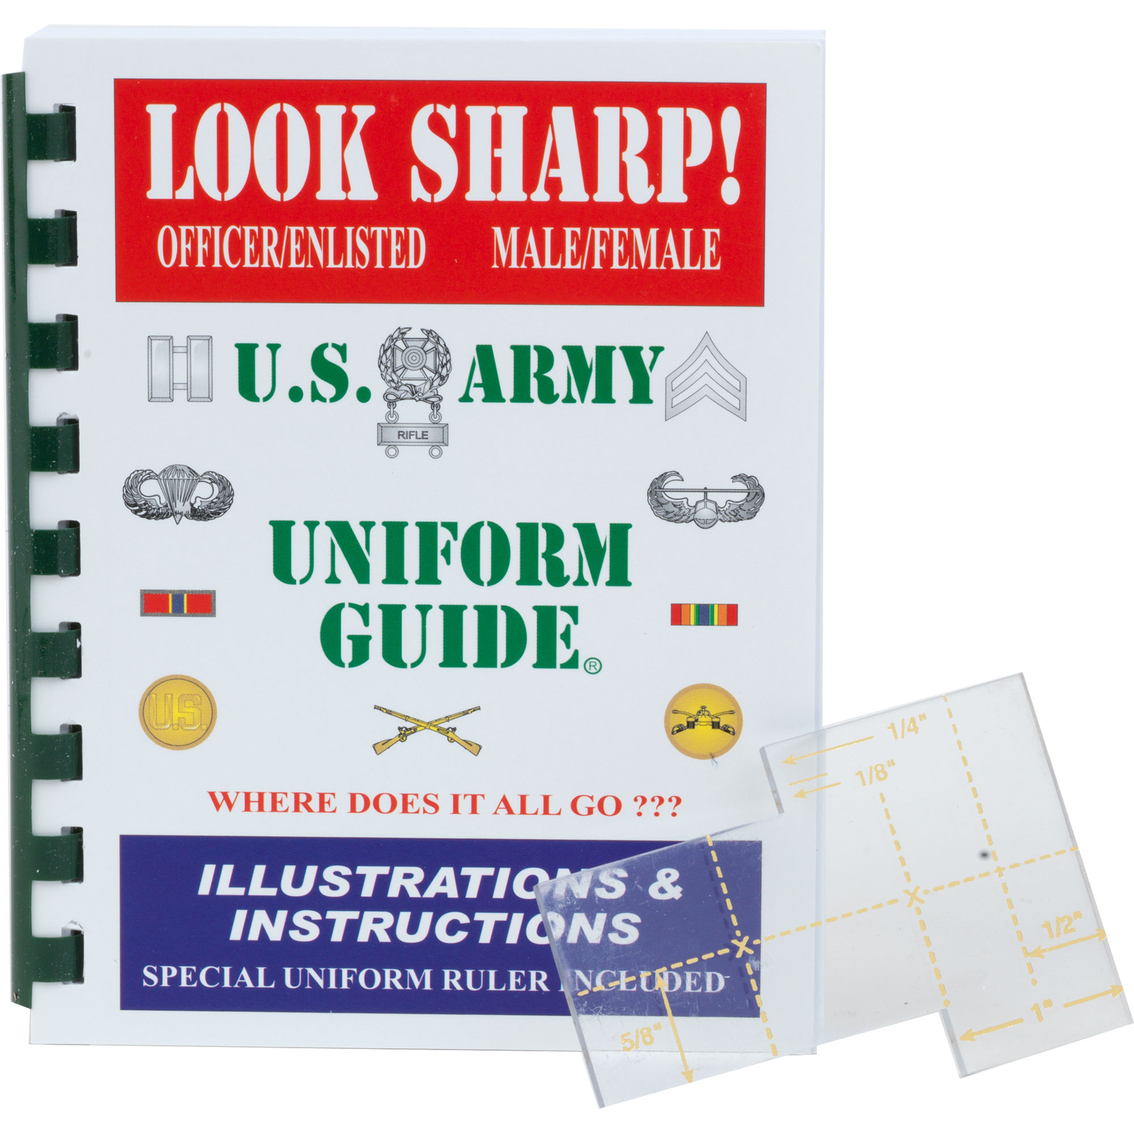 Look Sharp! U.S. Army Uniform Guide - Image 2 of 2